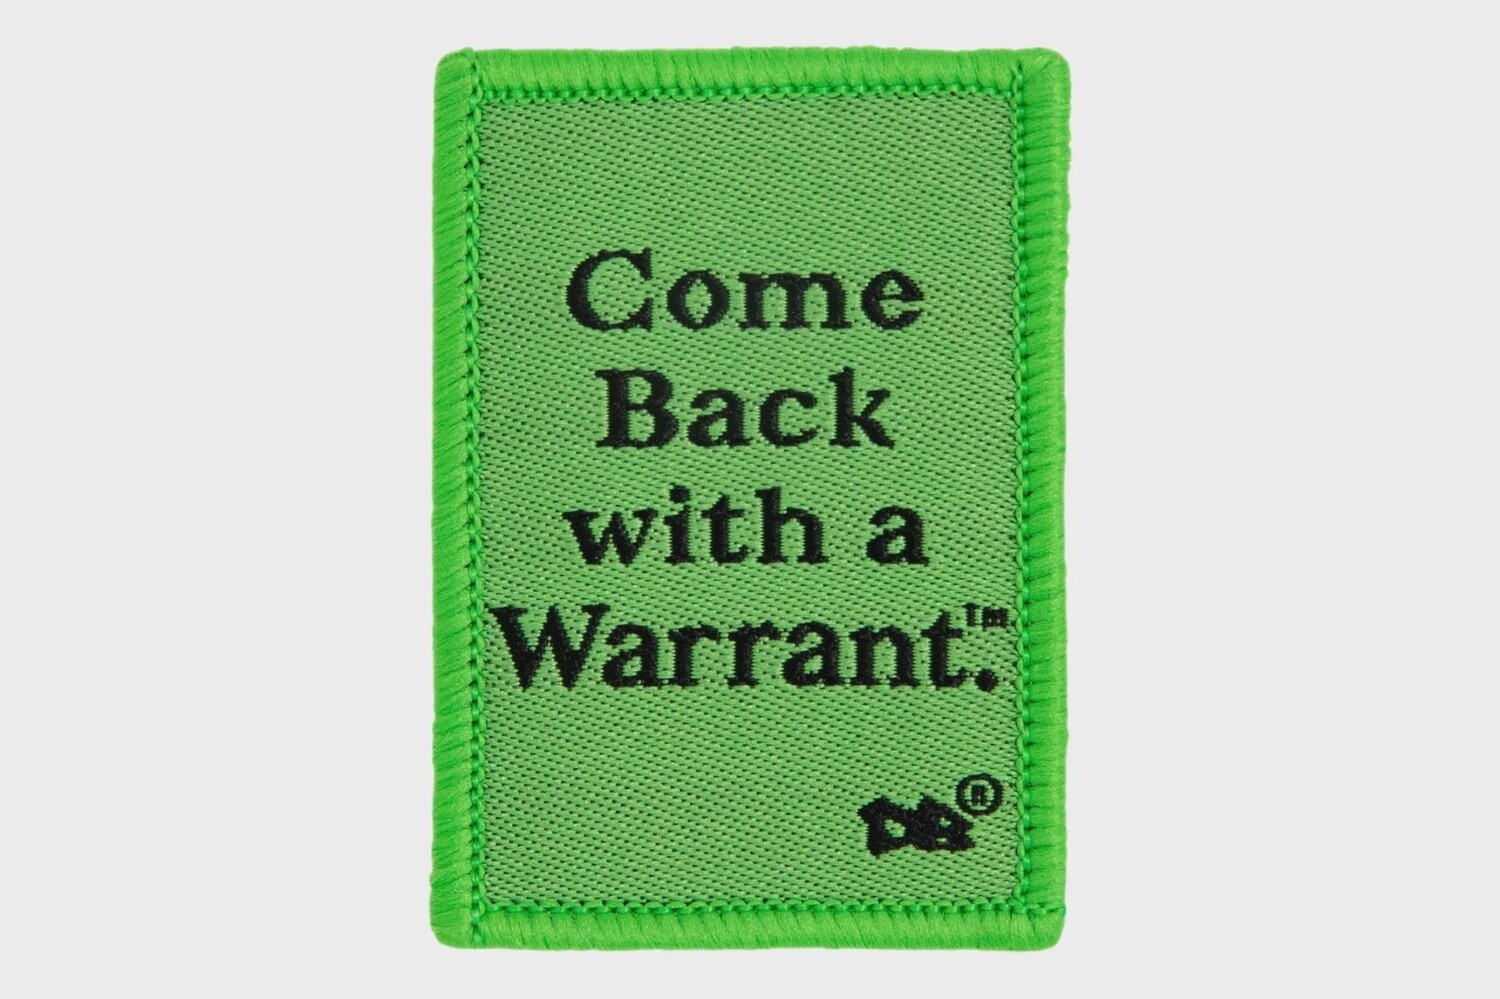 Warrant Patch